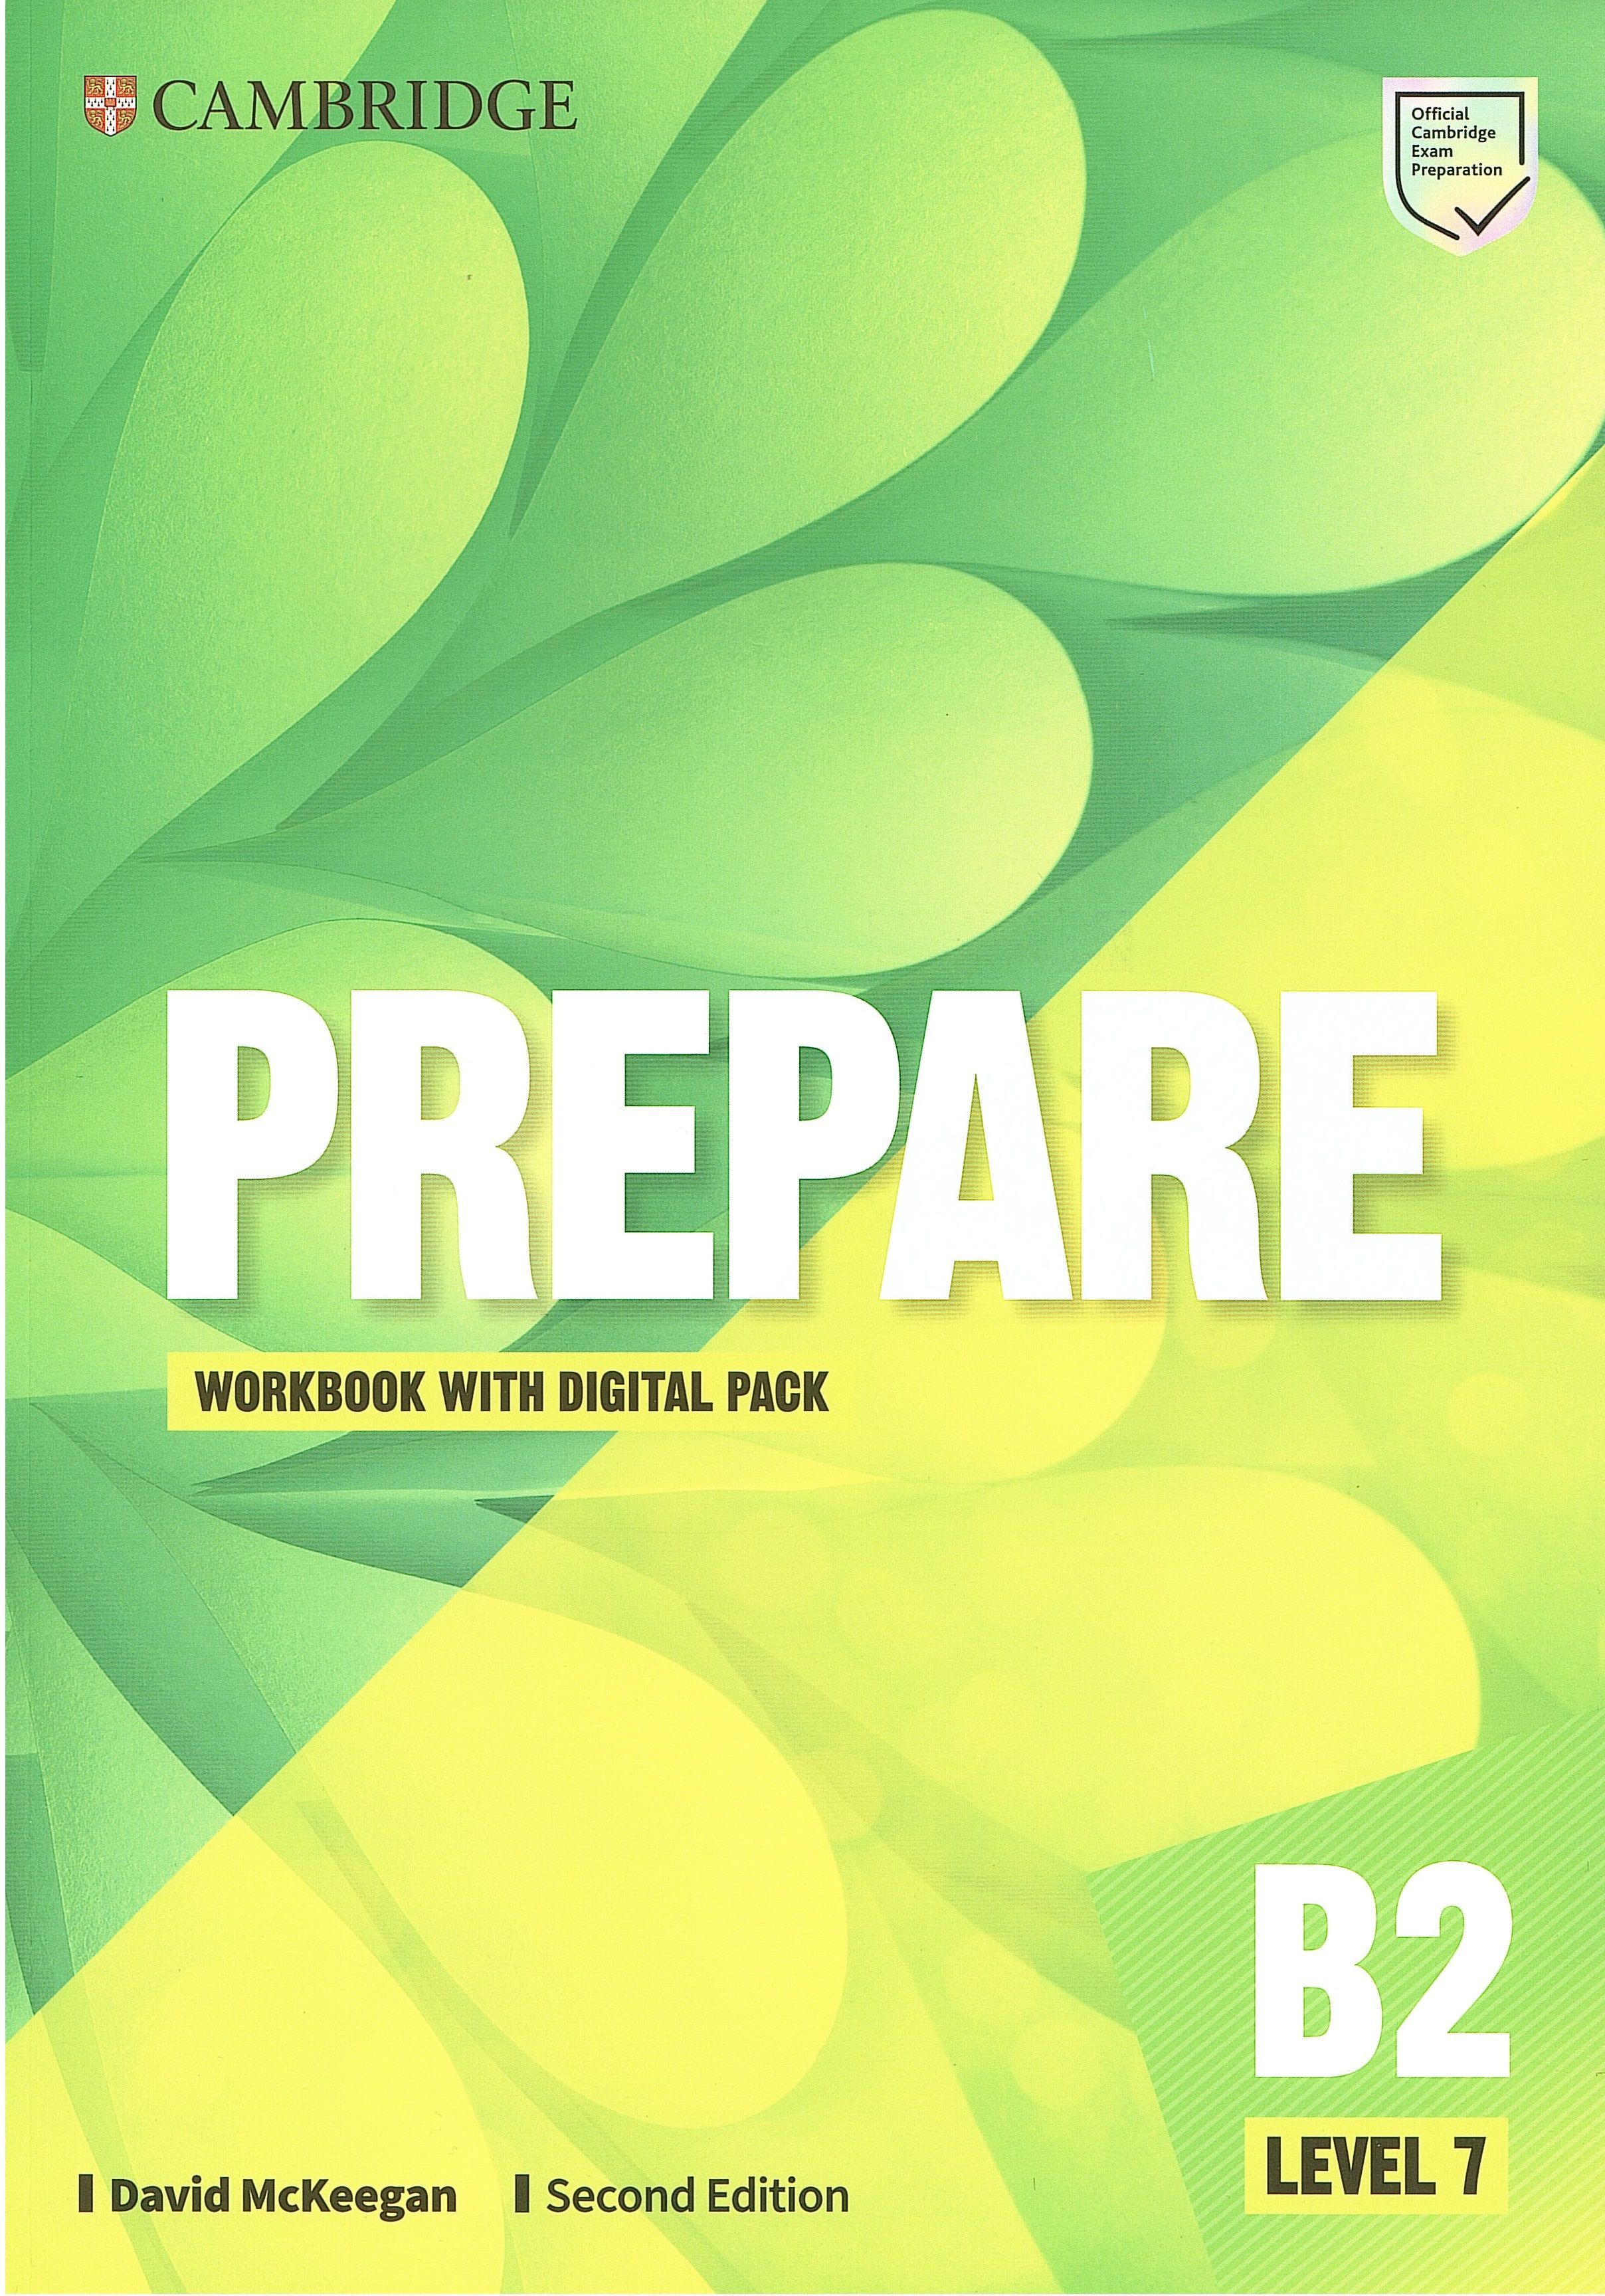 Prepare 2nd edition. Cambridge English Workbook Level 7 prepare second Edition. Prepare 7 2nd Edition. Prepare second Edition Level 7. Учебник prepare 7.